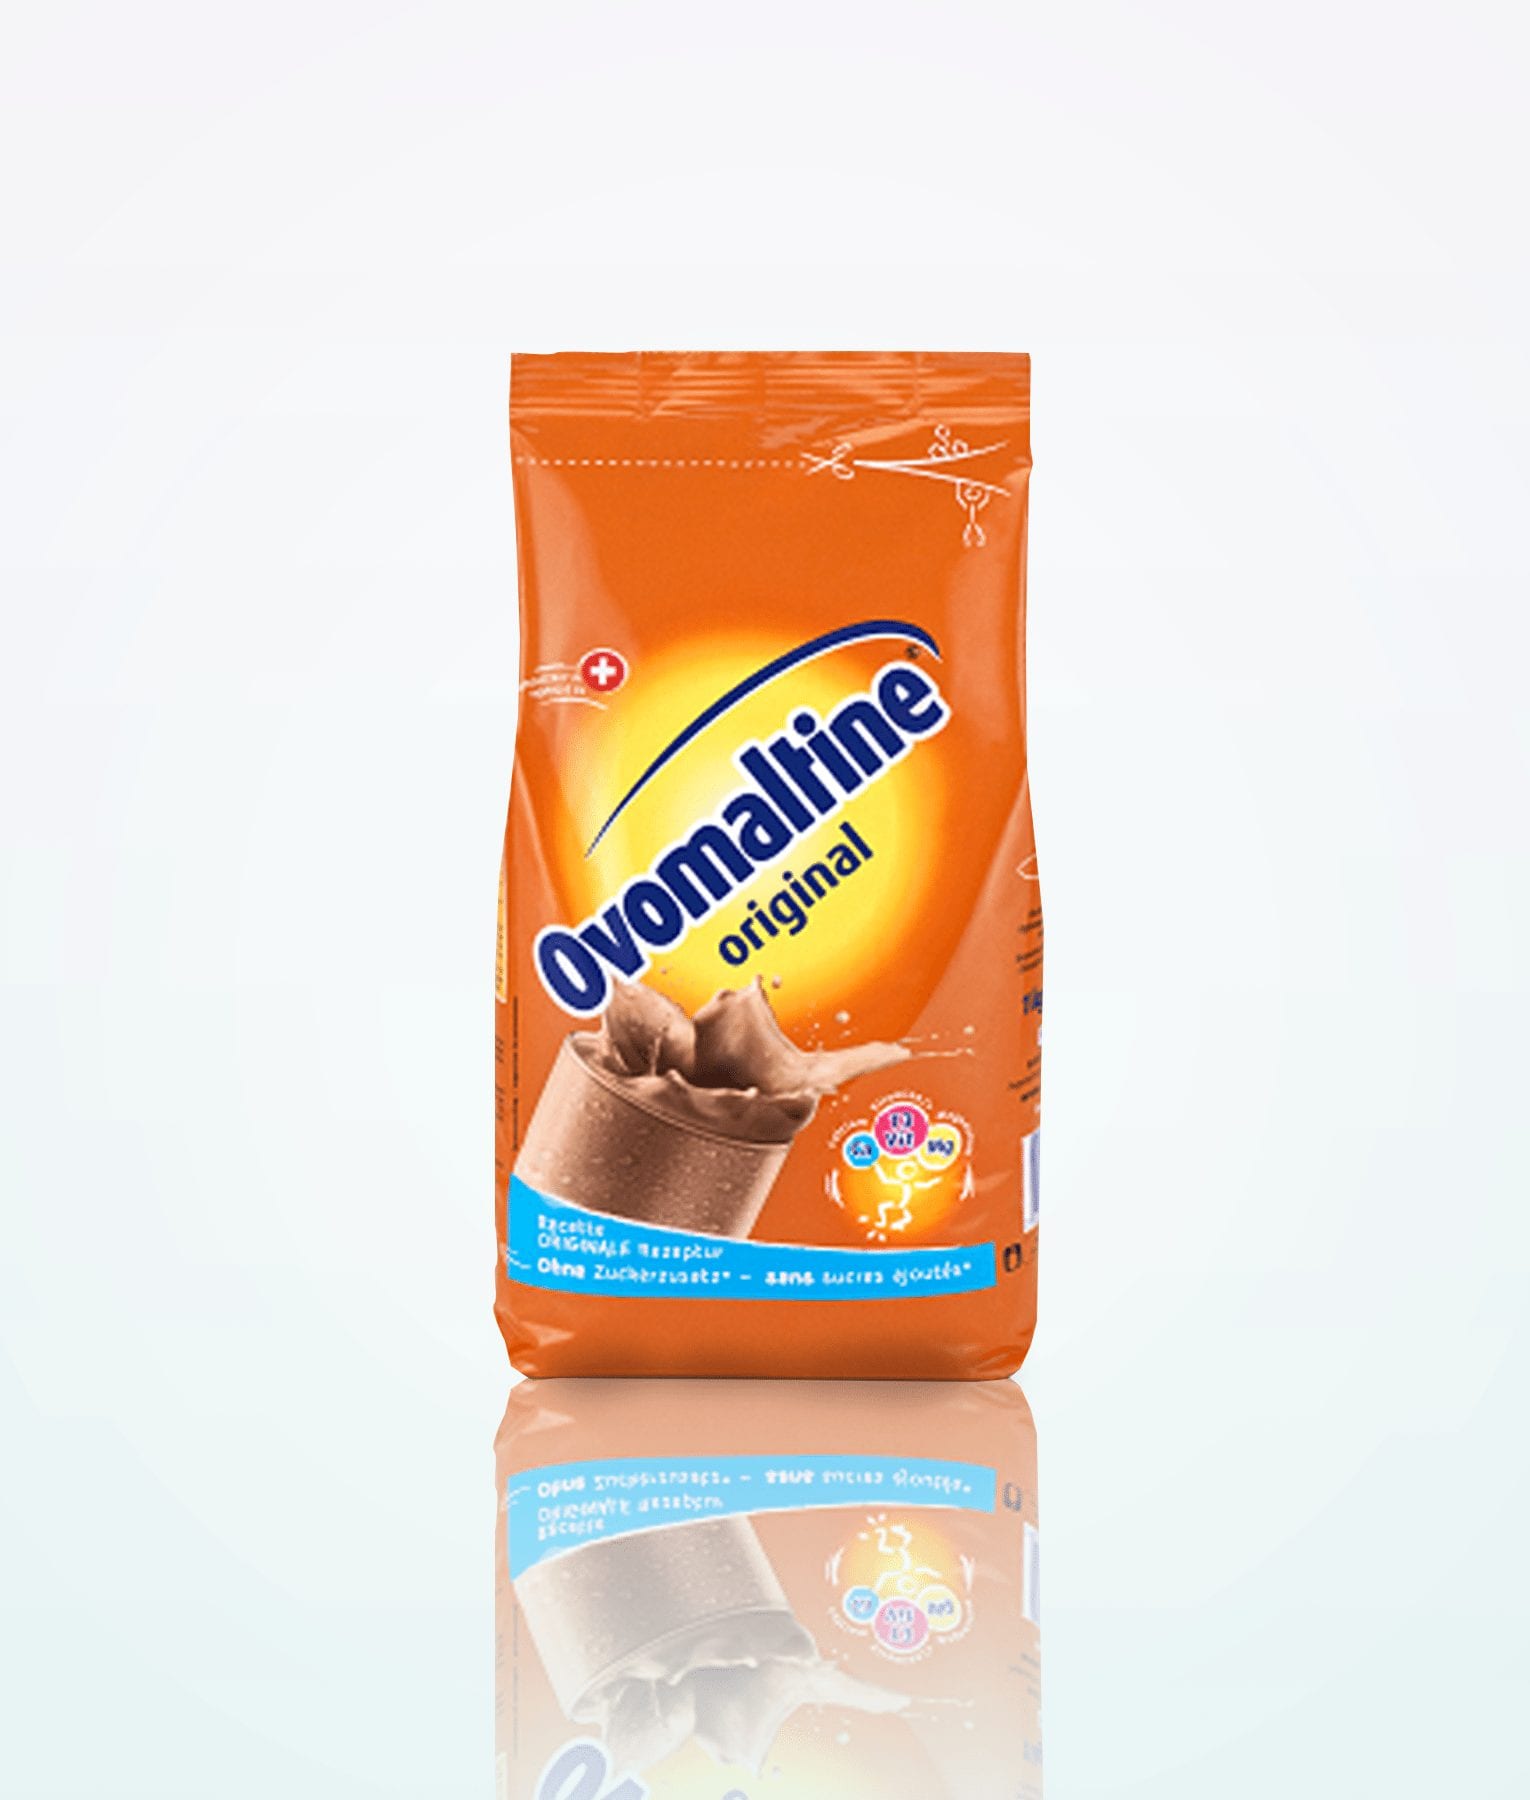 Ovomaltine Chocolate / Chocolate bars 